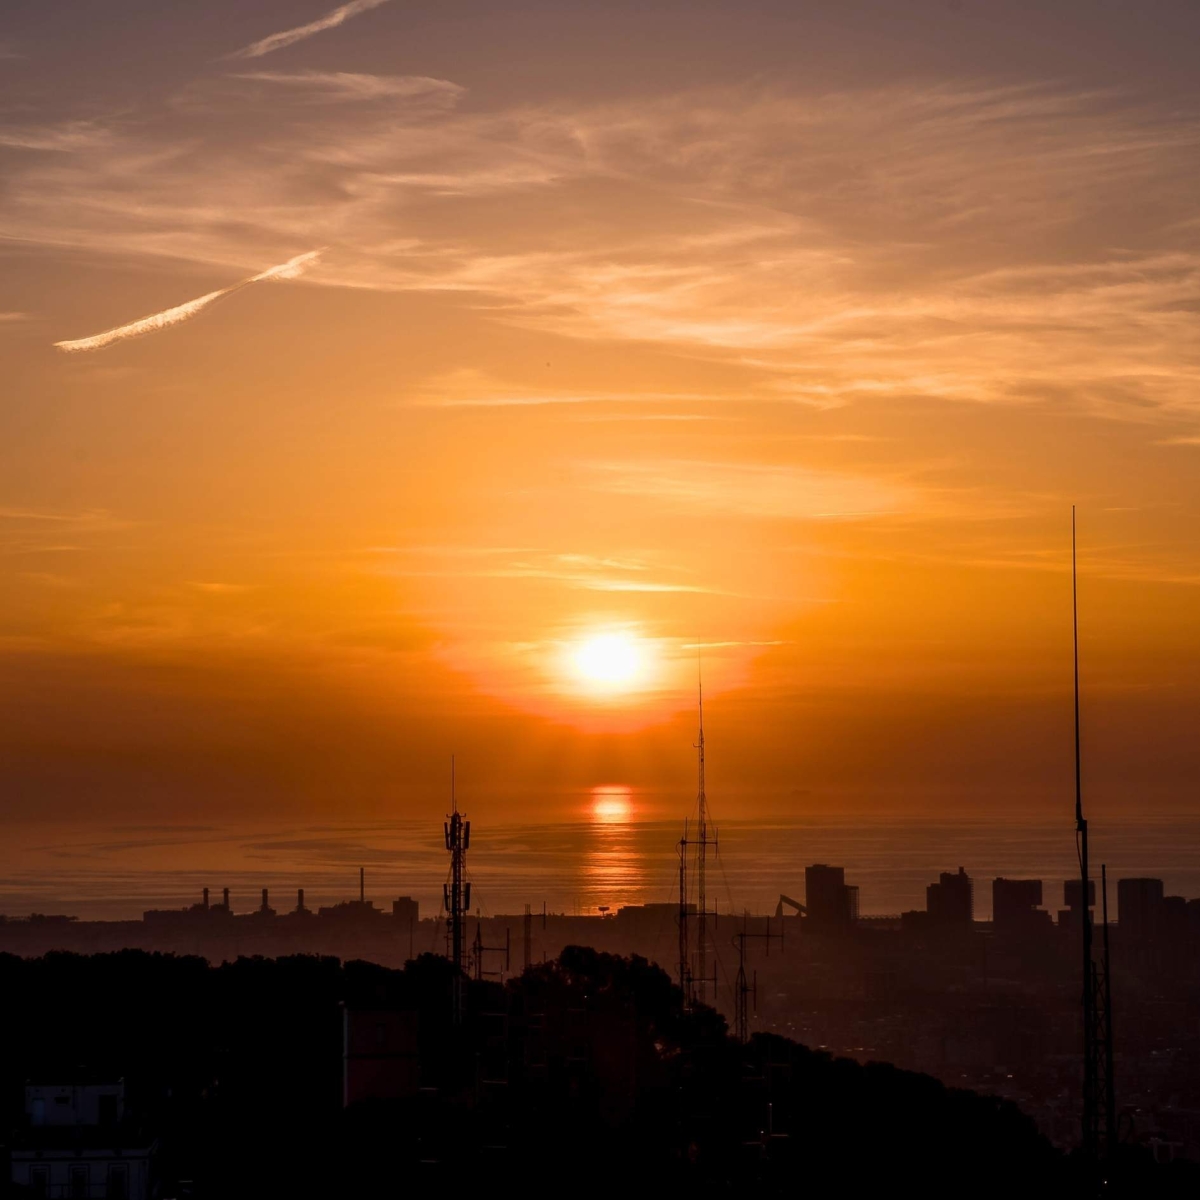 7 Uhr Sonnenaufgang über Barcelona von Bunkers del Carmel